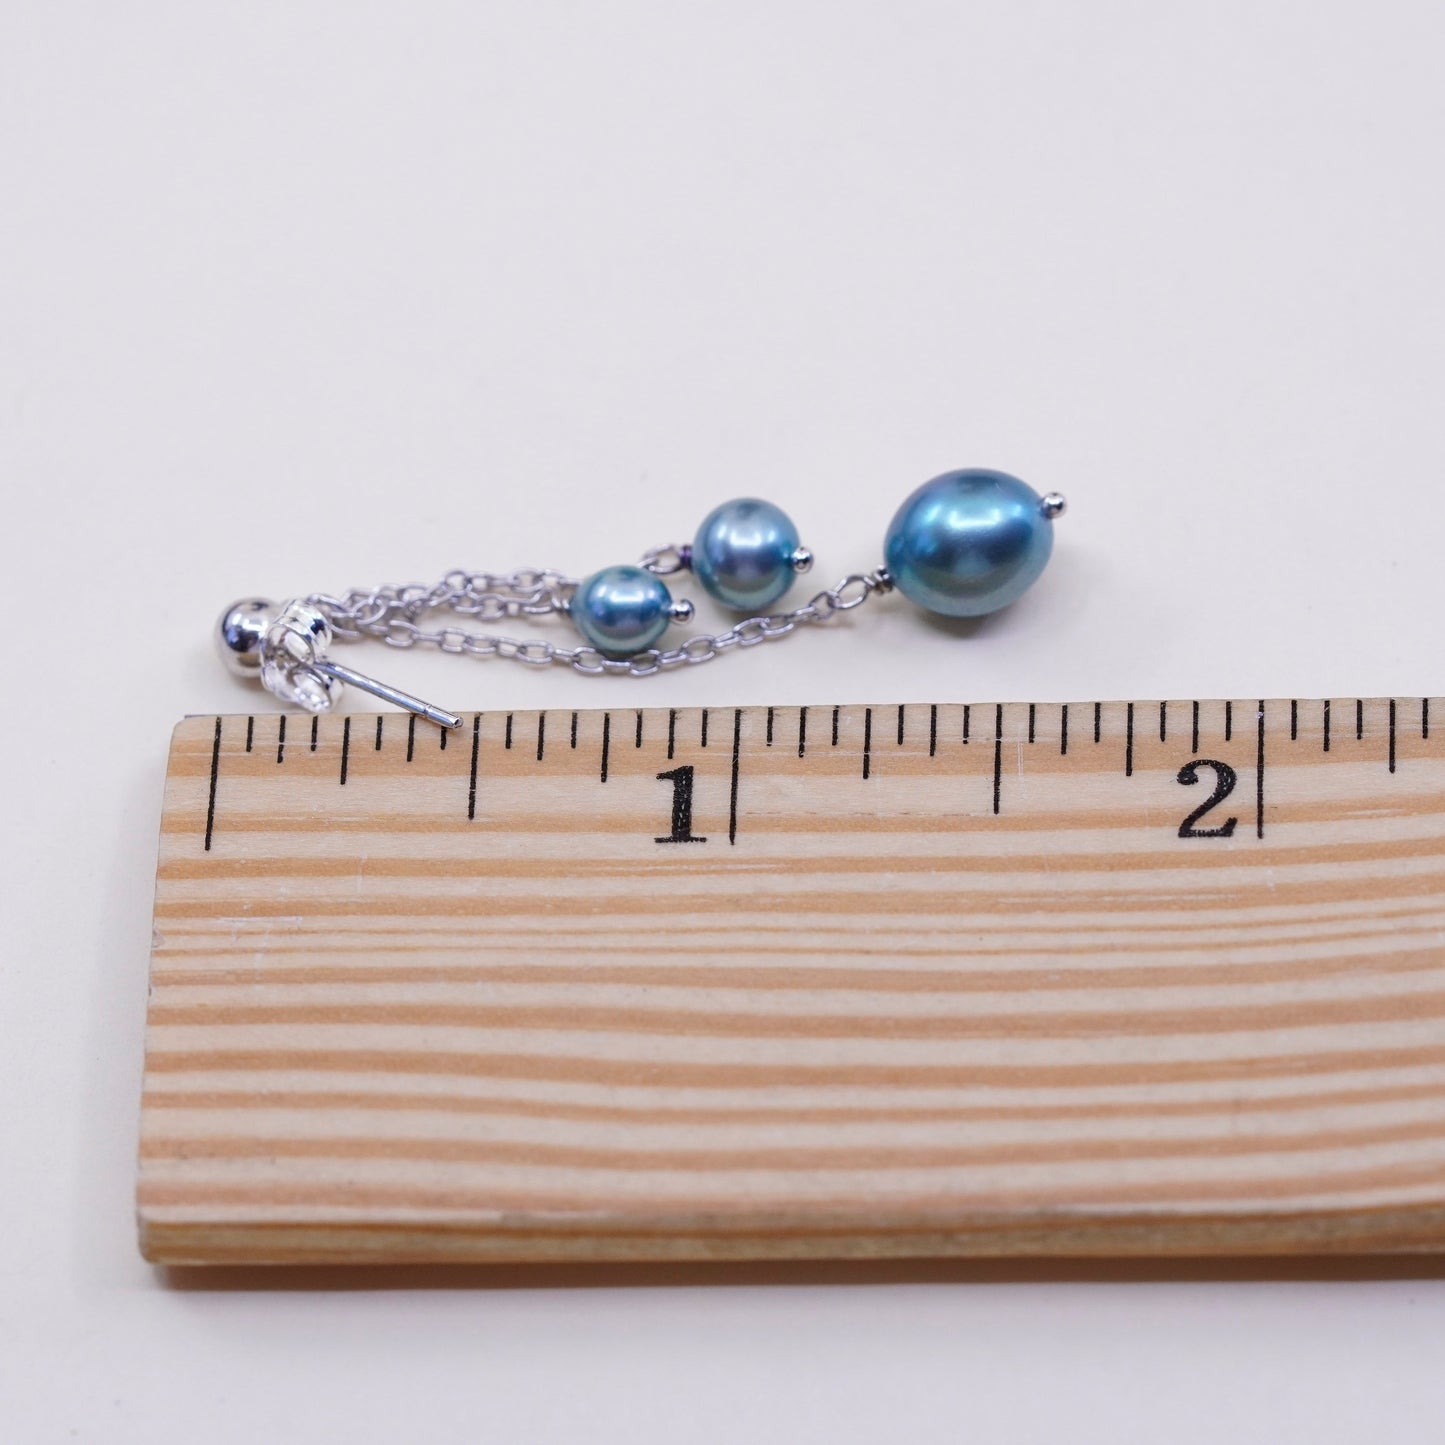 Vintage sterling 925 silver handmade earrings with fringe pearl dangles